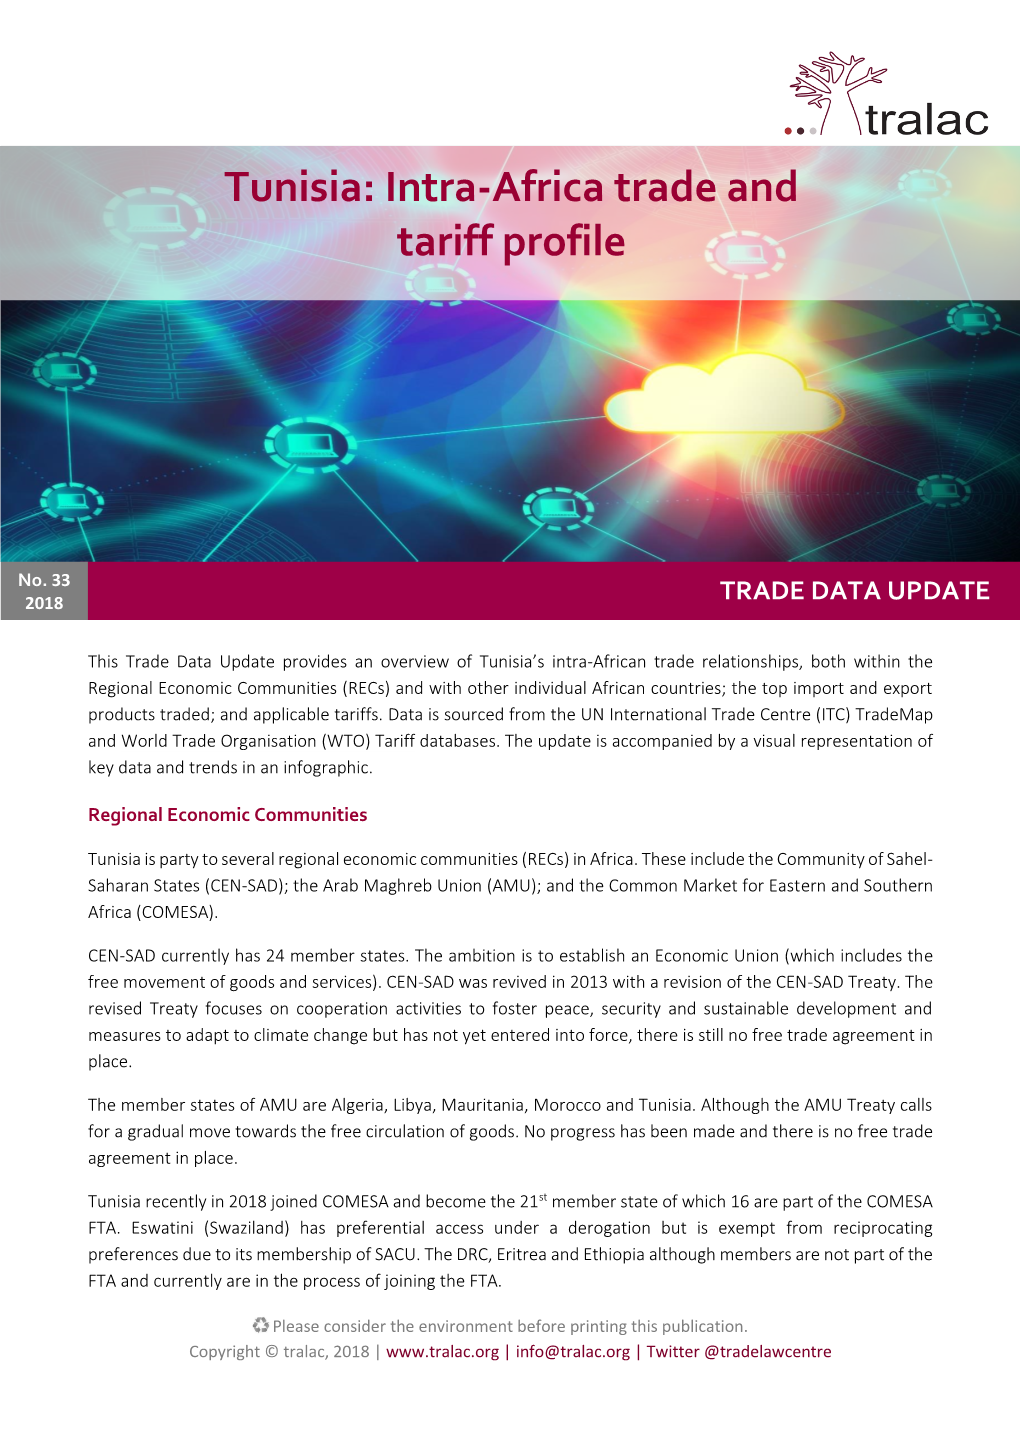 Tunisia Intra-Africa Trade and Tariff Profile December 2018